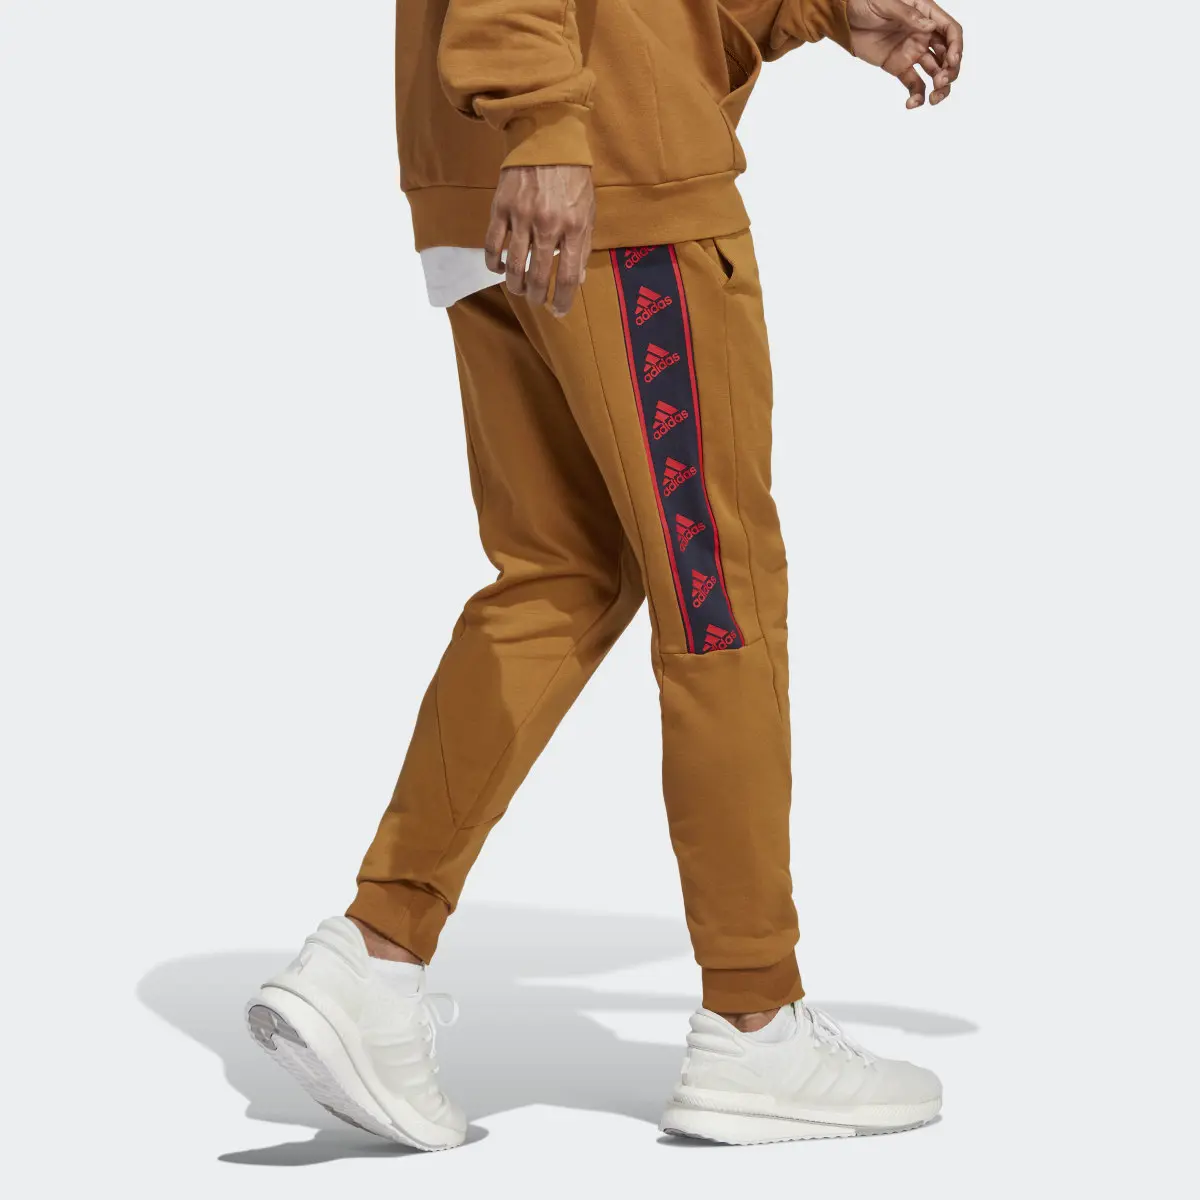 Adidas Brandlove Pants. 2